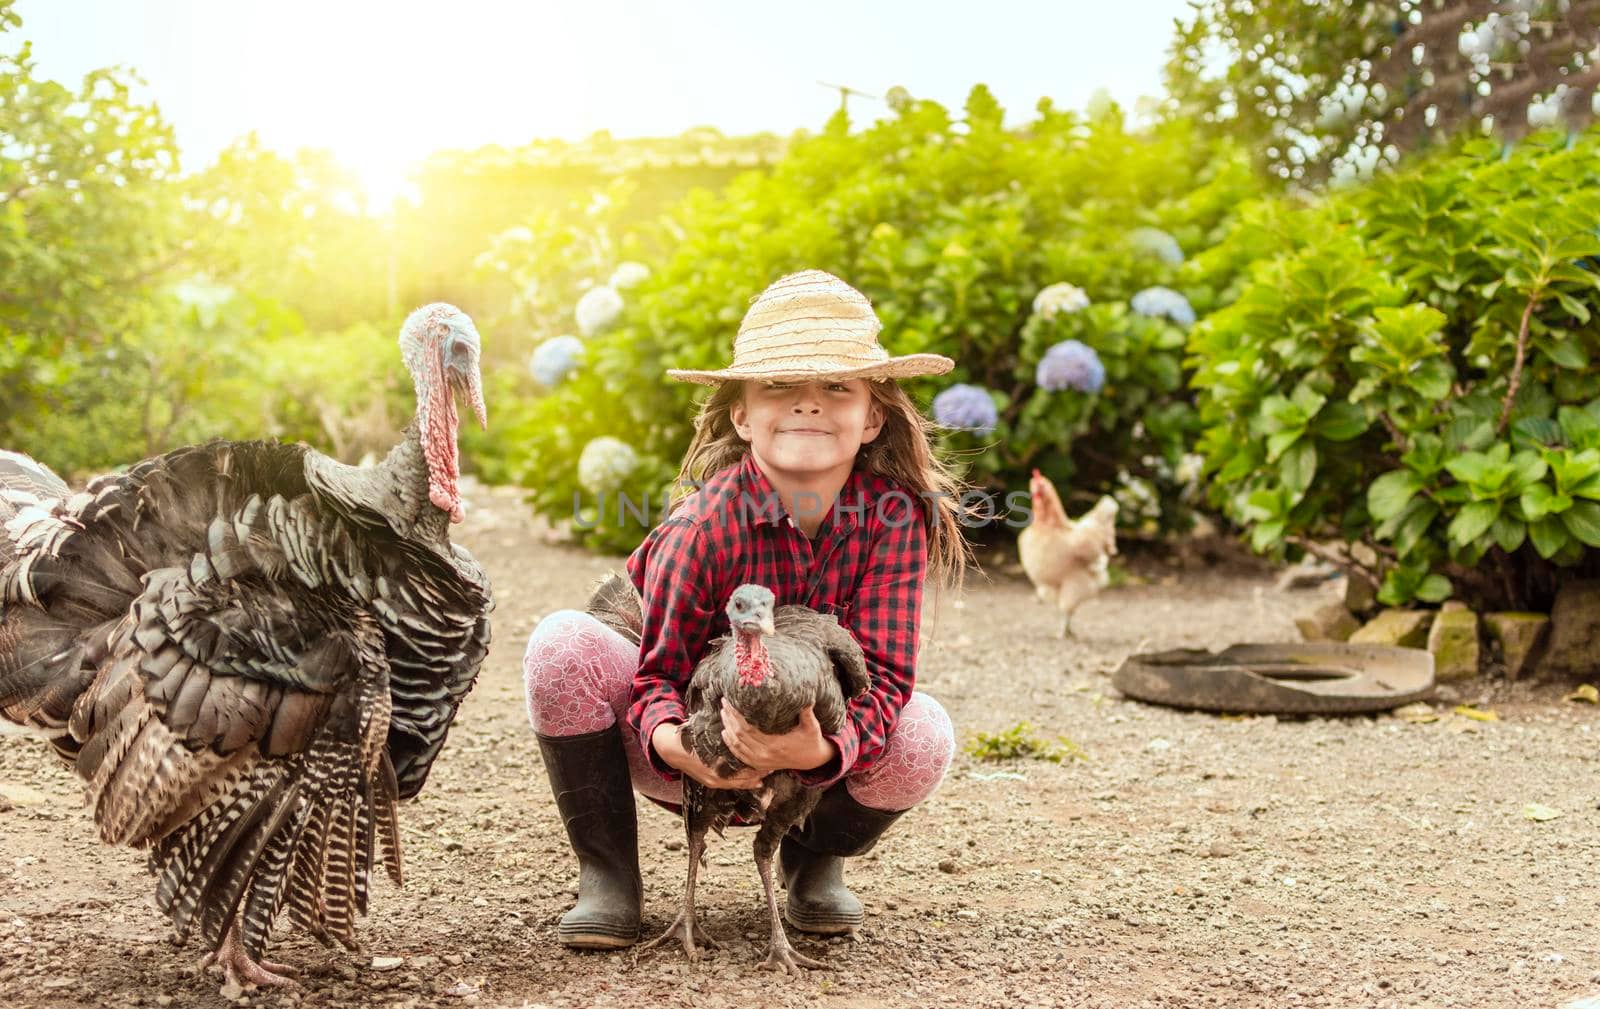 farm girl hugging turkey, farm girl holding turkeys at sunset, girl on the farm with turkeys, Caring for turkeys and domestic animals